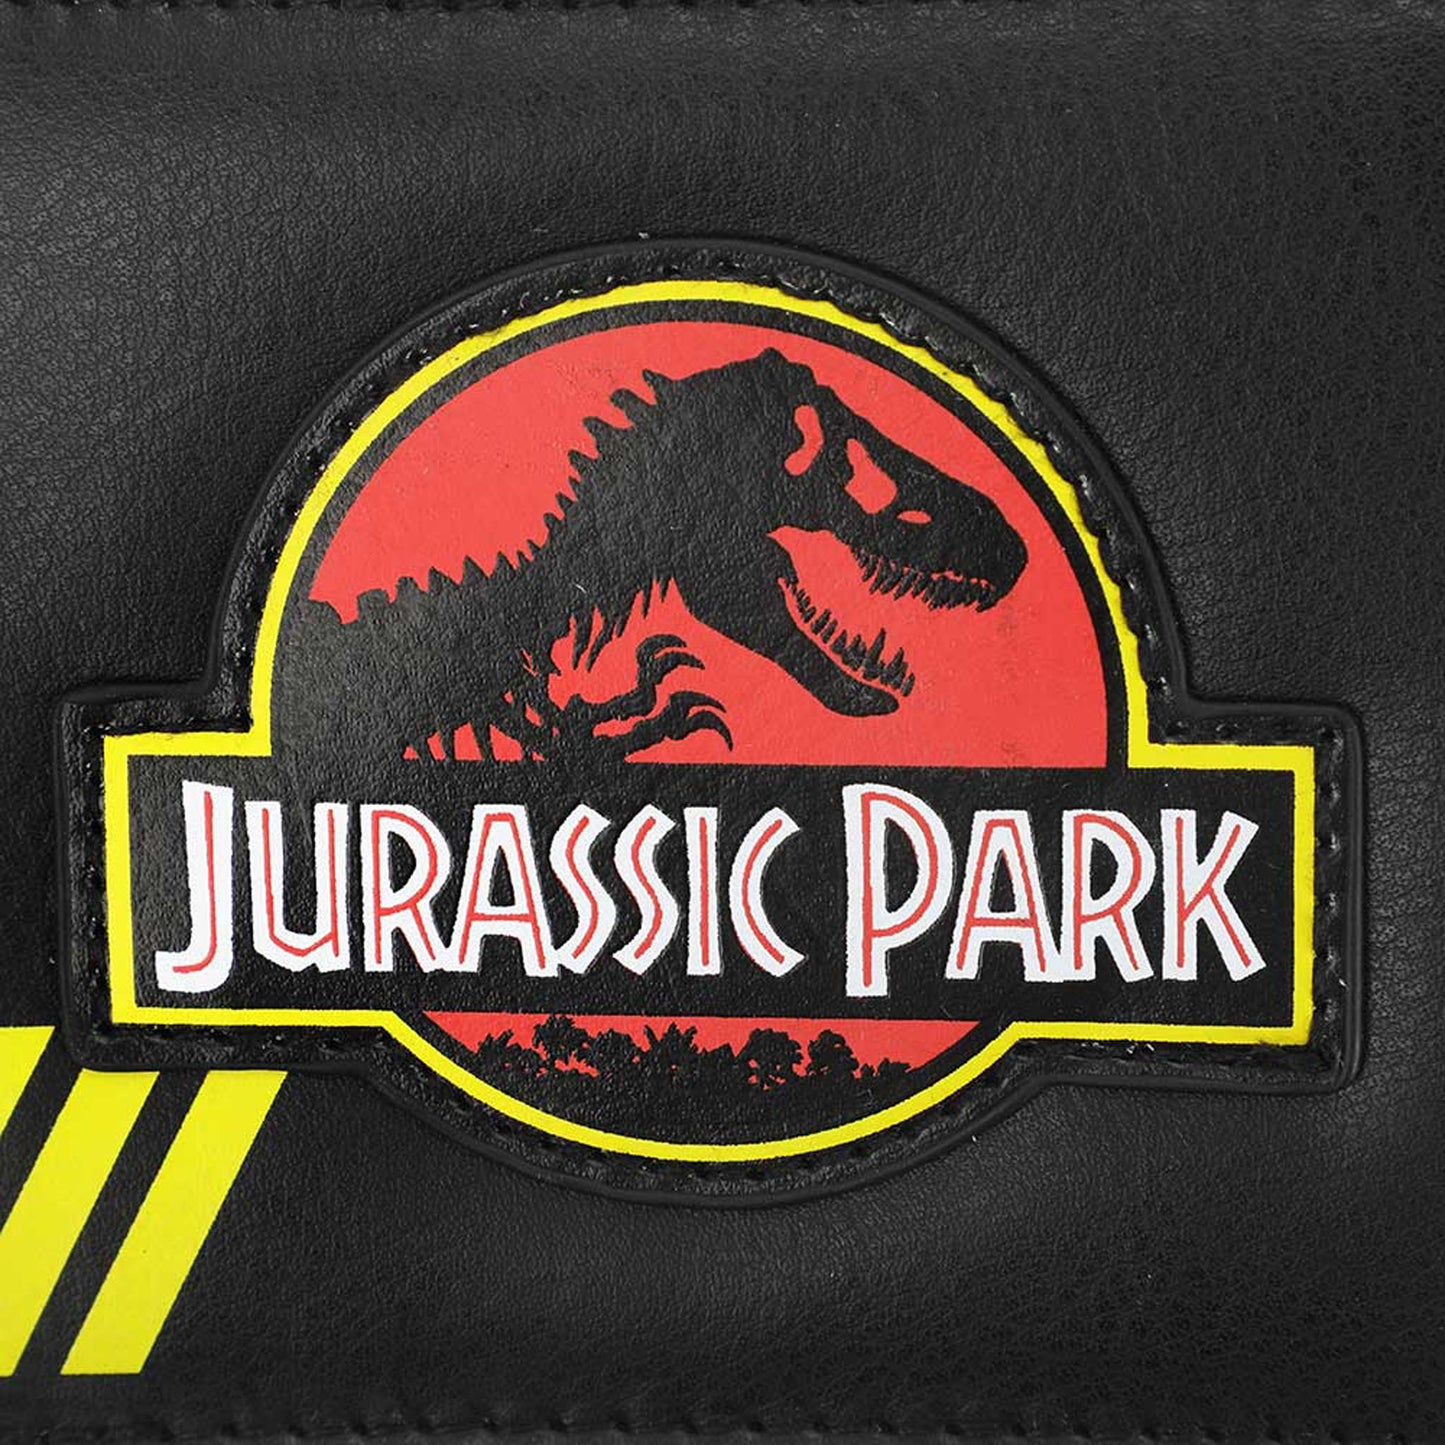 Jurassic Park Rubber Badge Bi-Fold Wallet